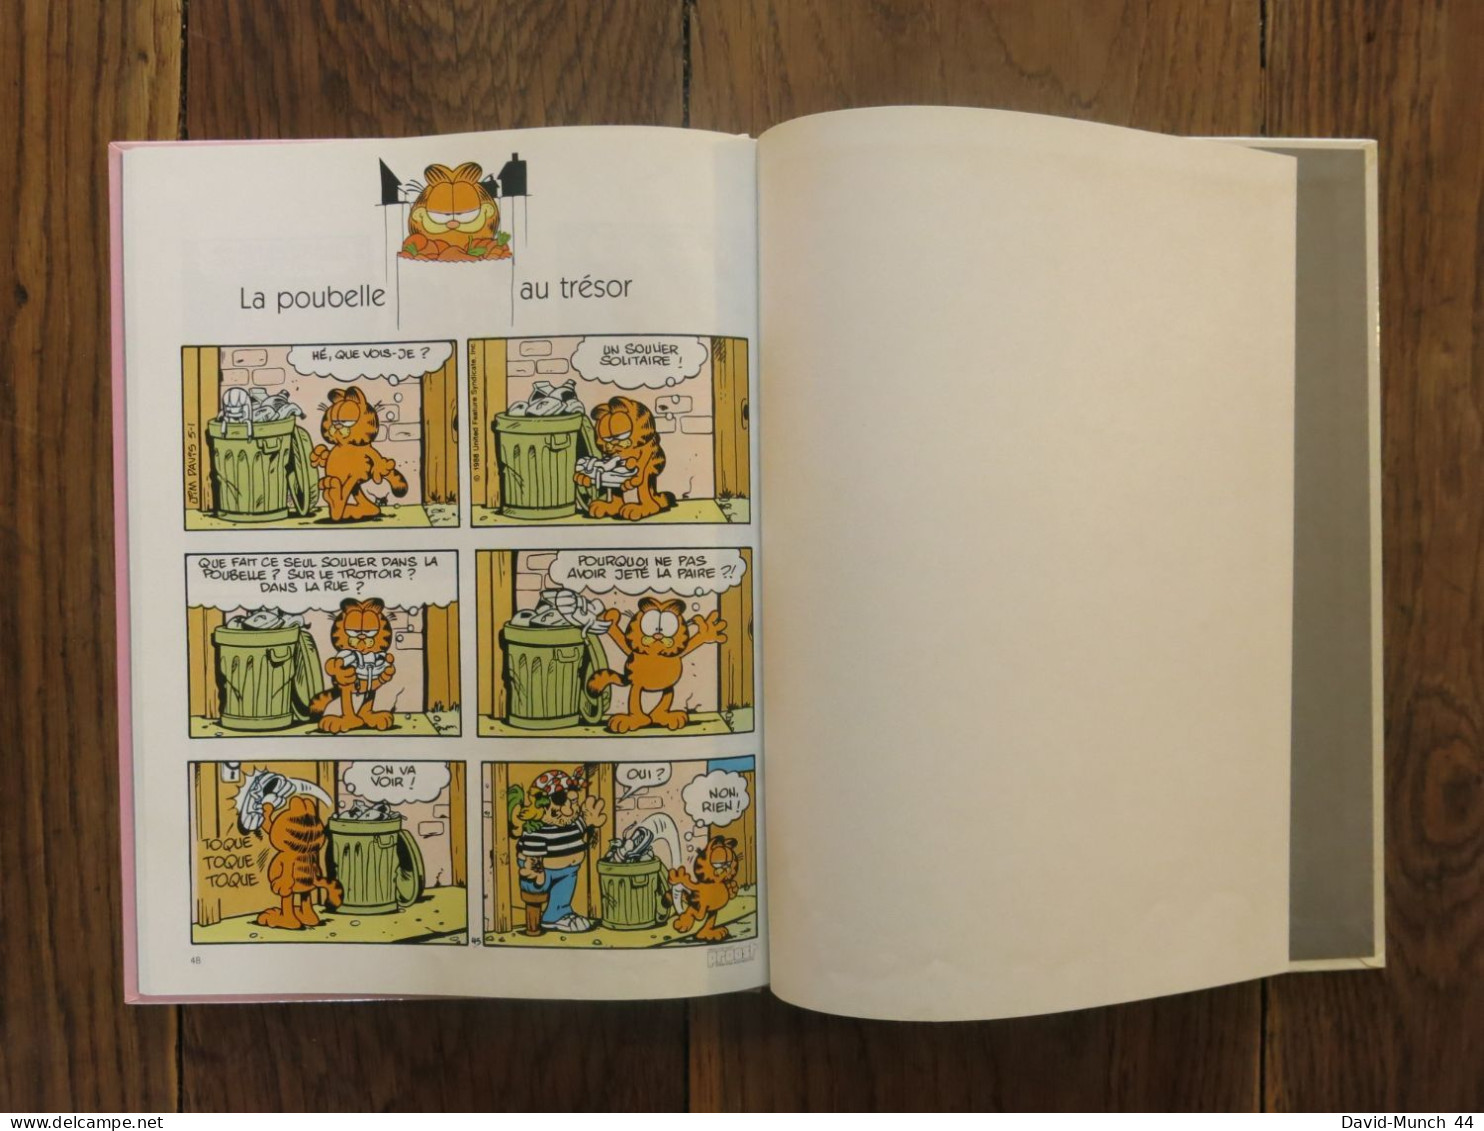 (BD) Garfield sonne toujours deux fois de Jim Davis. Bagheera. 1991